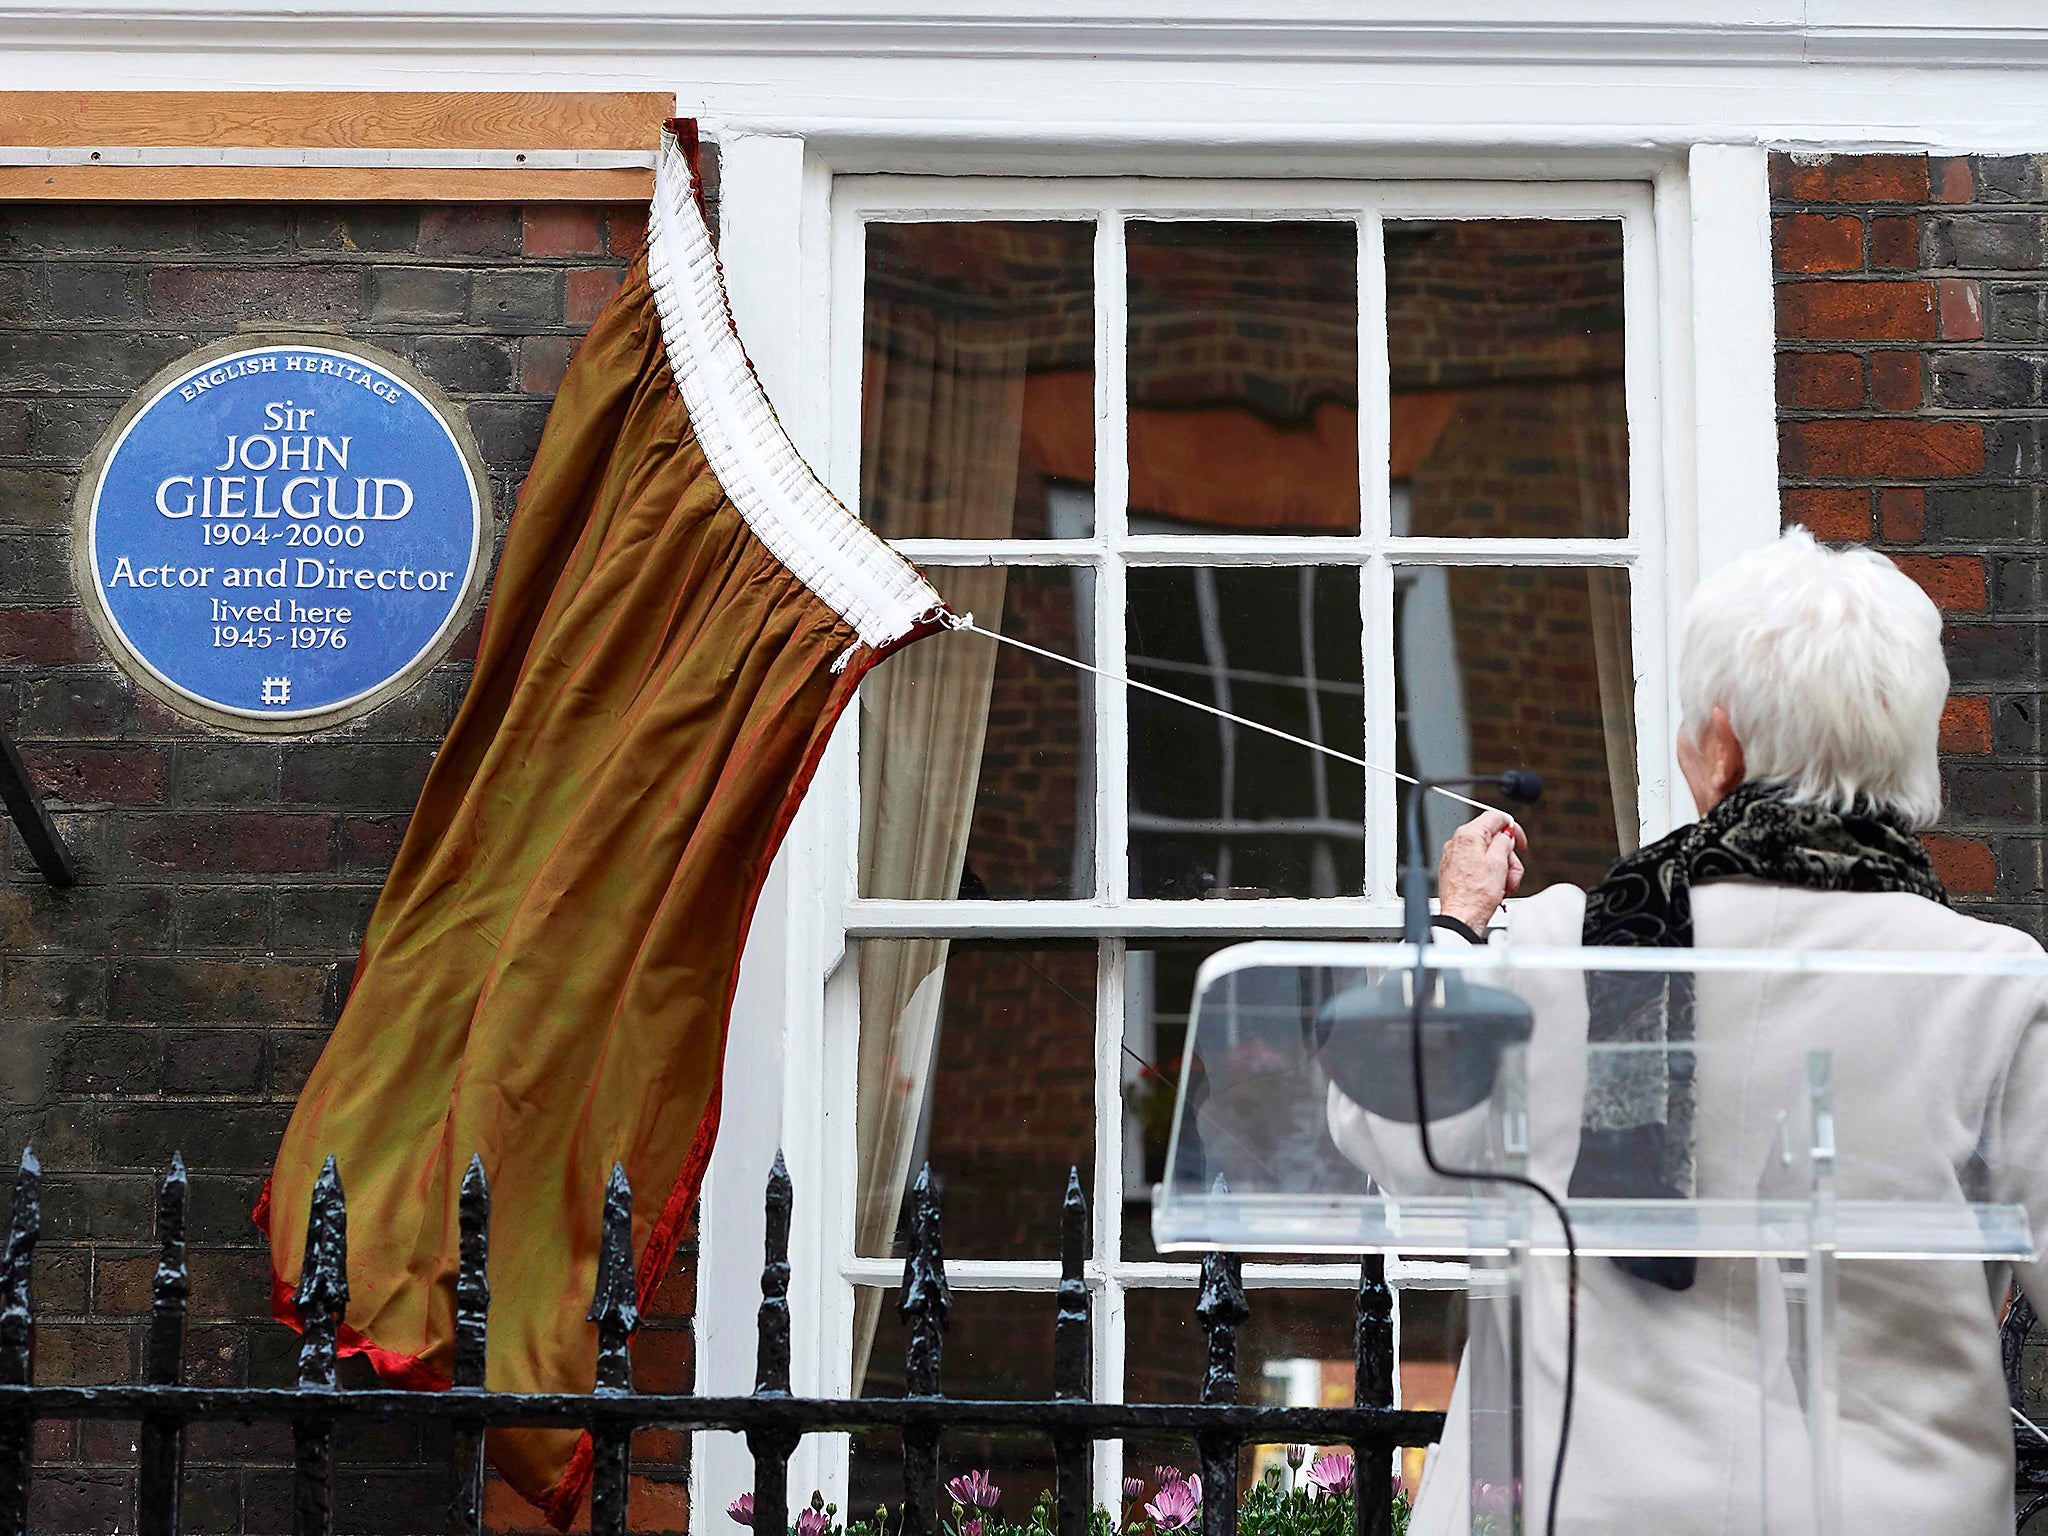 Dame Judi Dench unveils a plaque for Sir John Gielgud